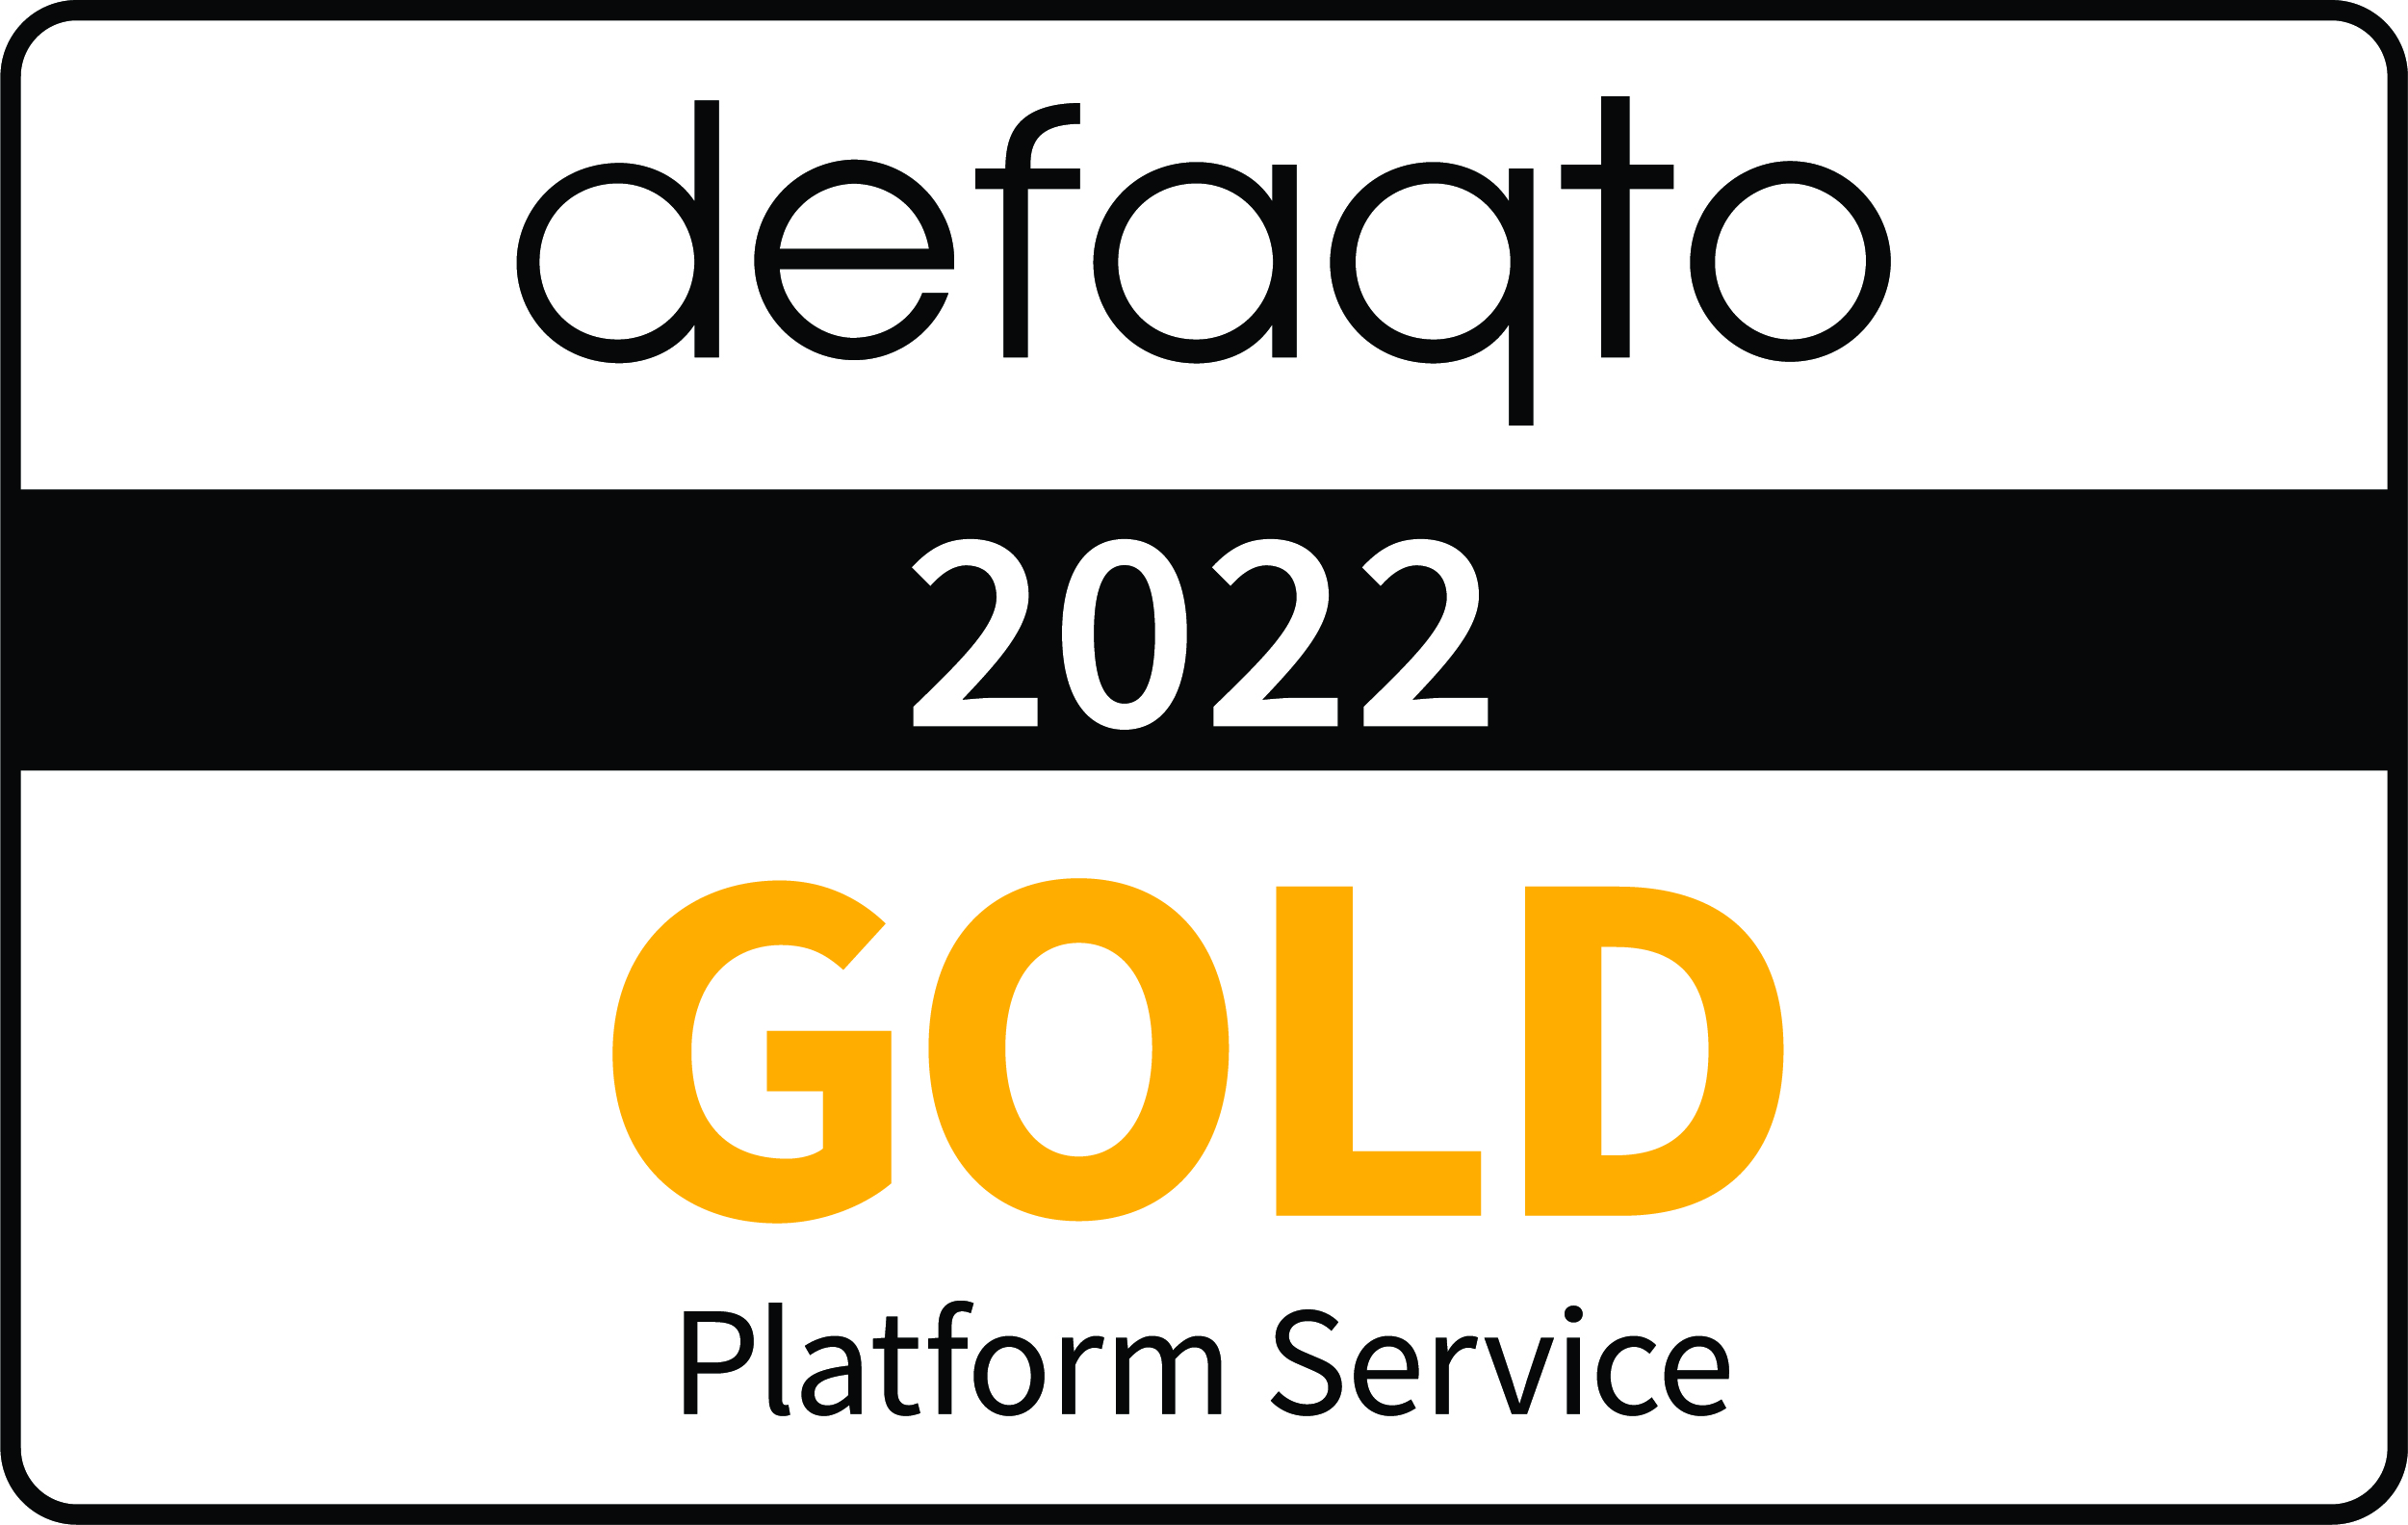 deafaqto gold platform service 2022